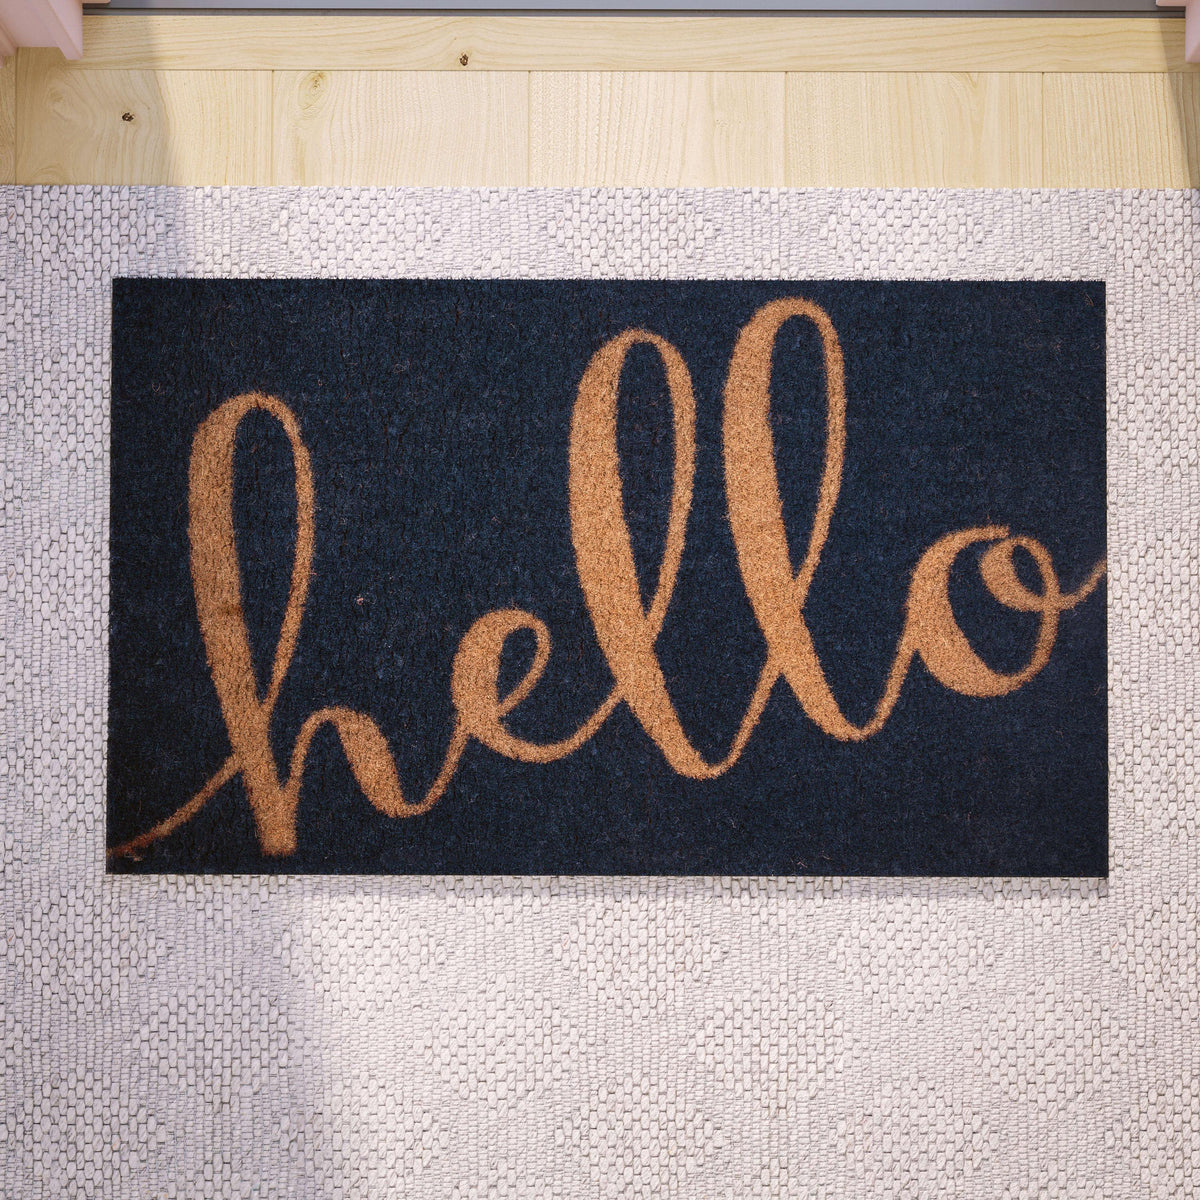 Navy |#| Indoor/Outdoor Coir Doormat with Hello Message and Non-Slip Back-Navy/Natural